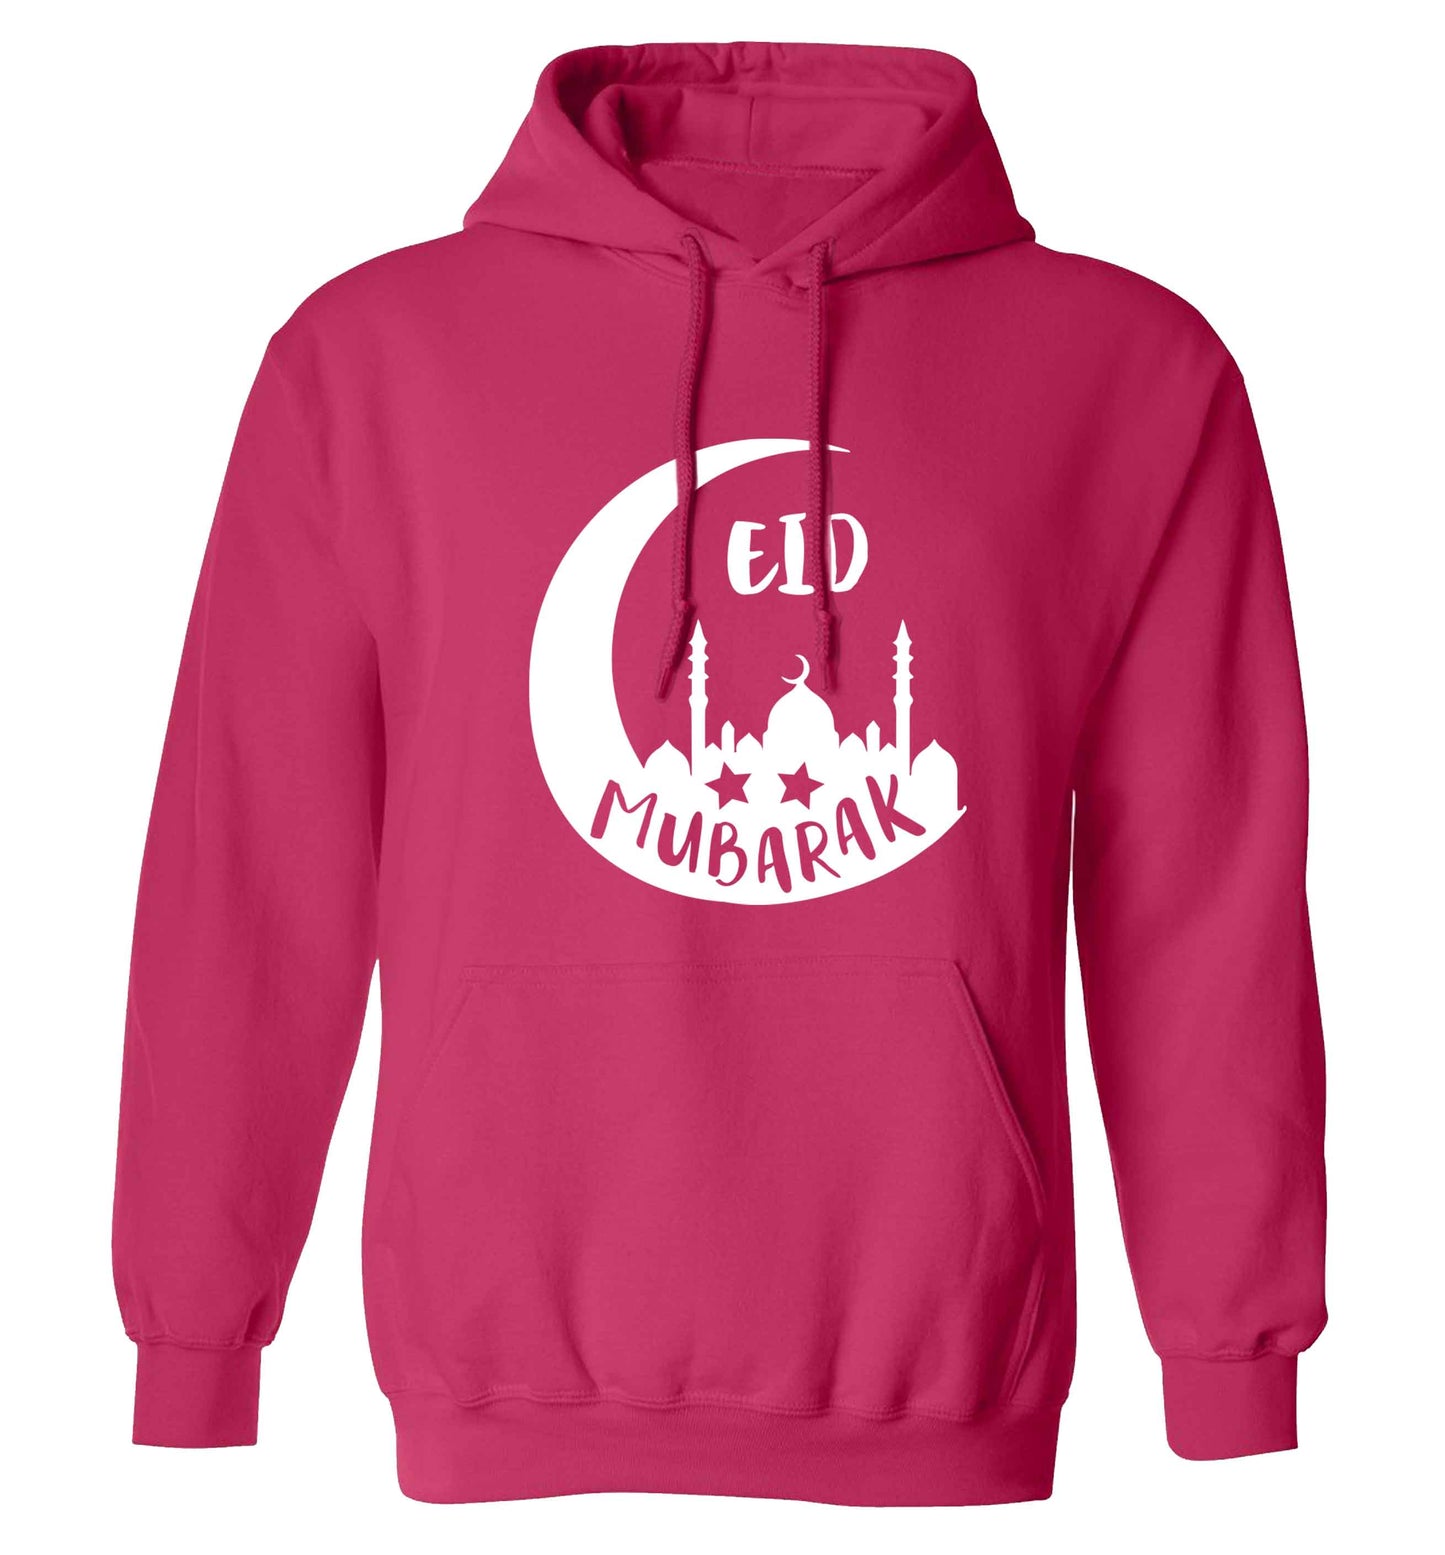 Eid mubarak adults unisex pink hoodie 2XL